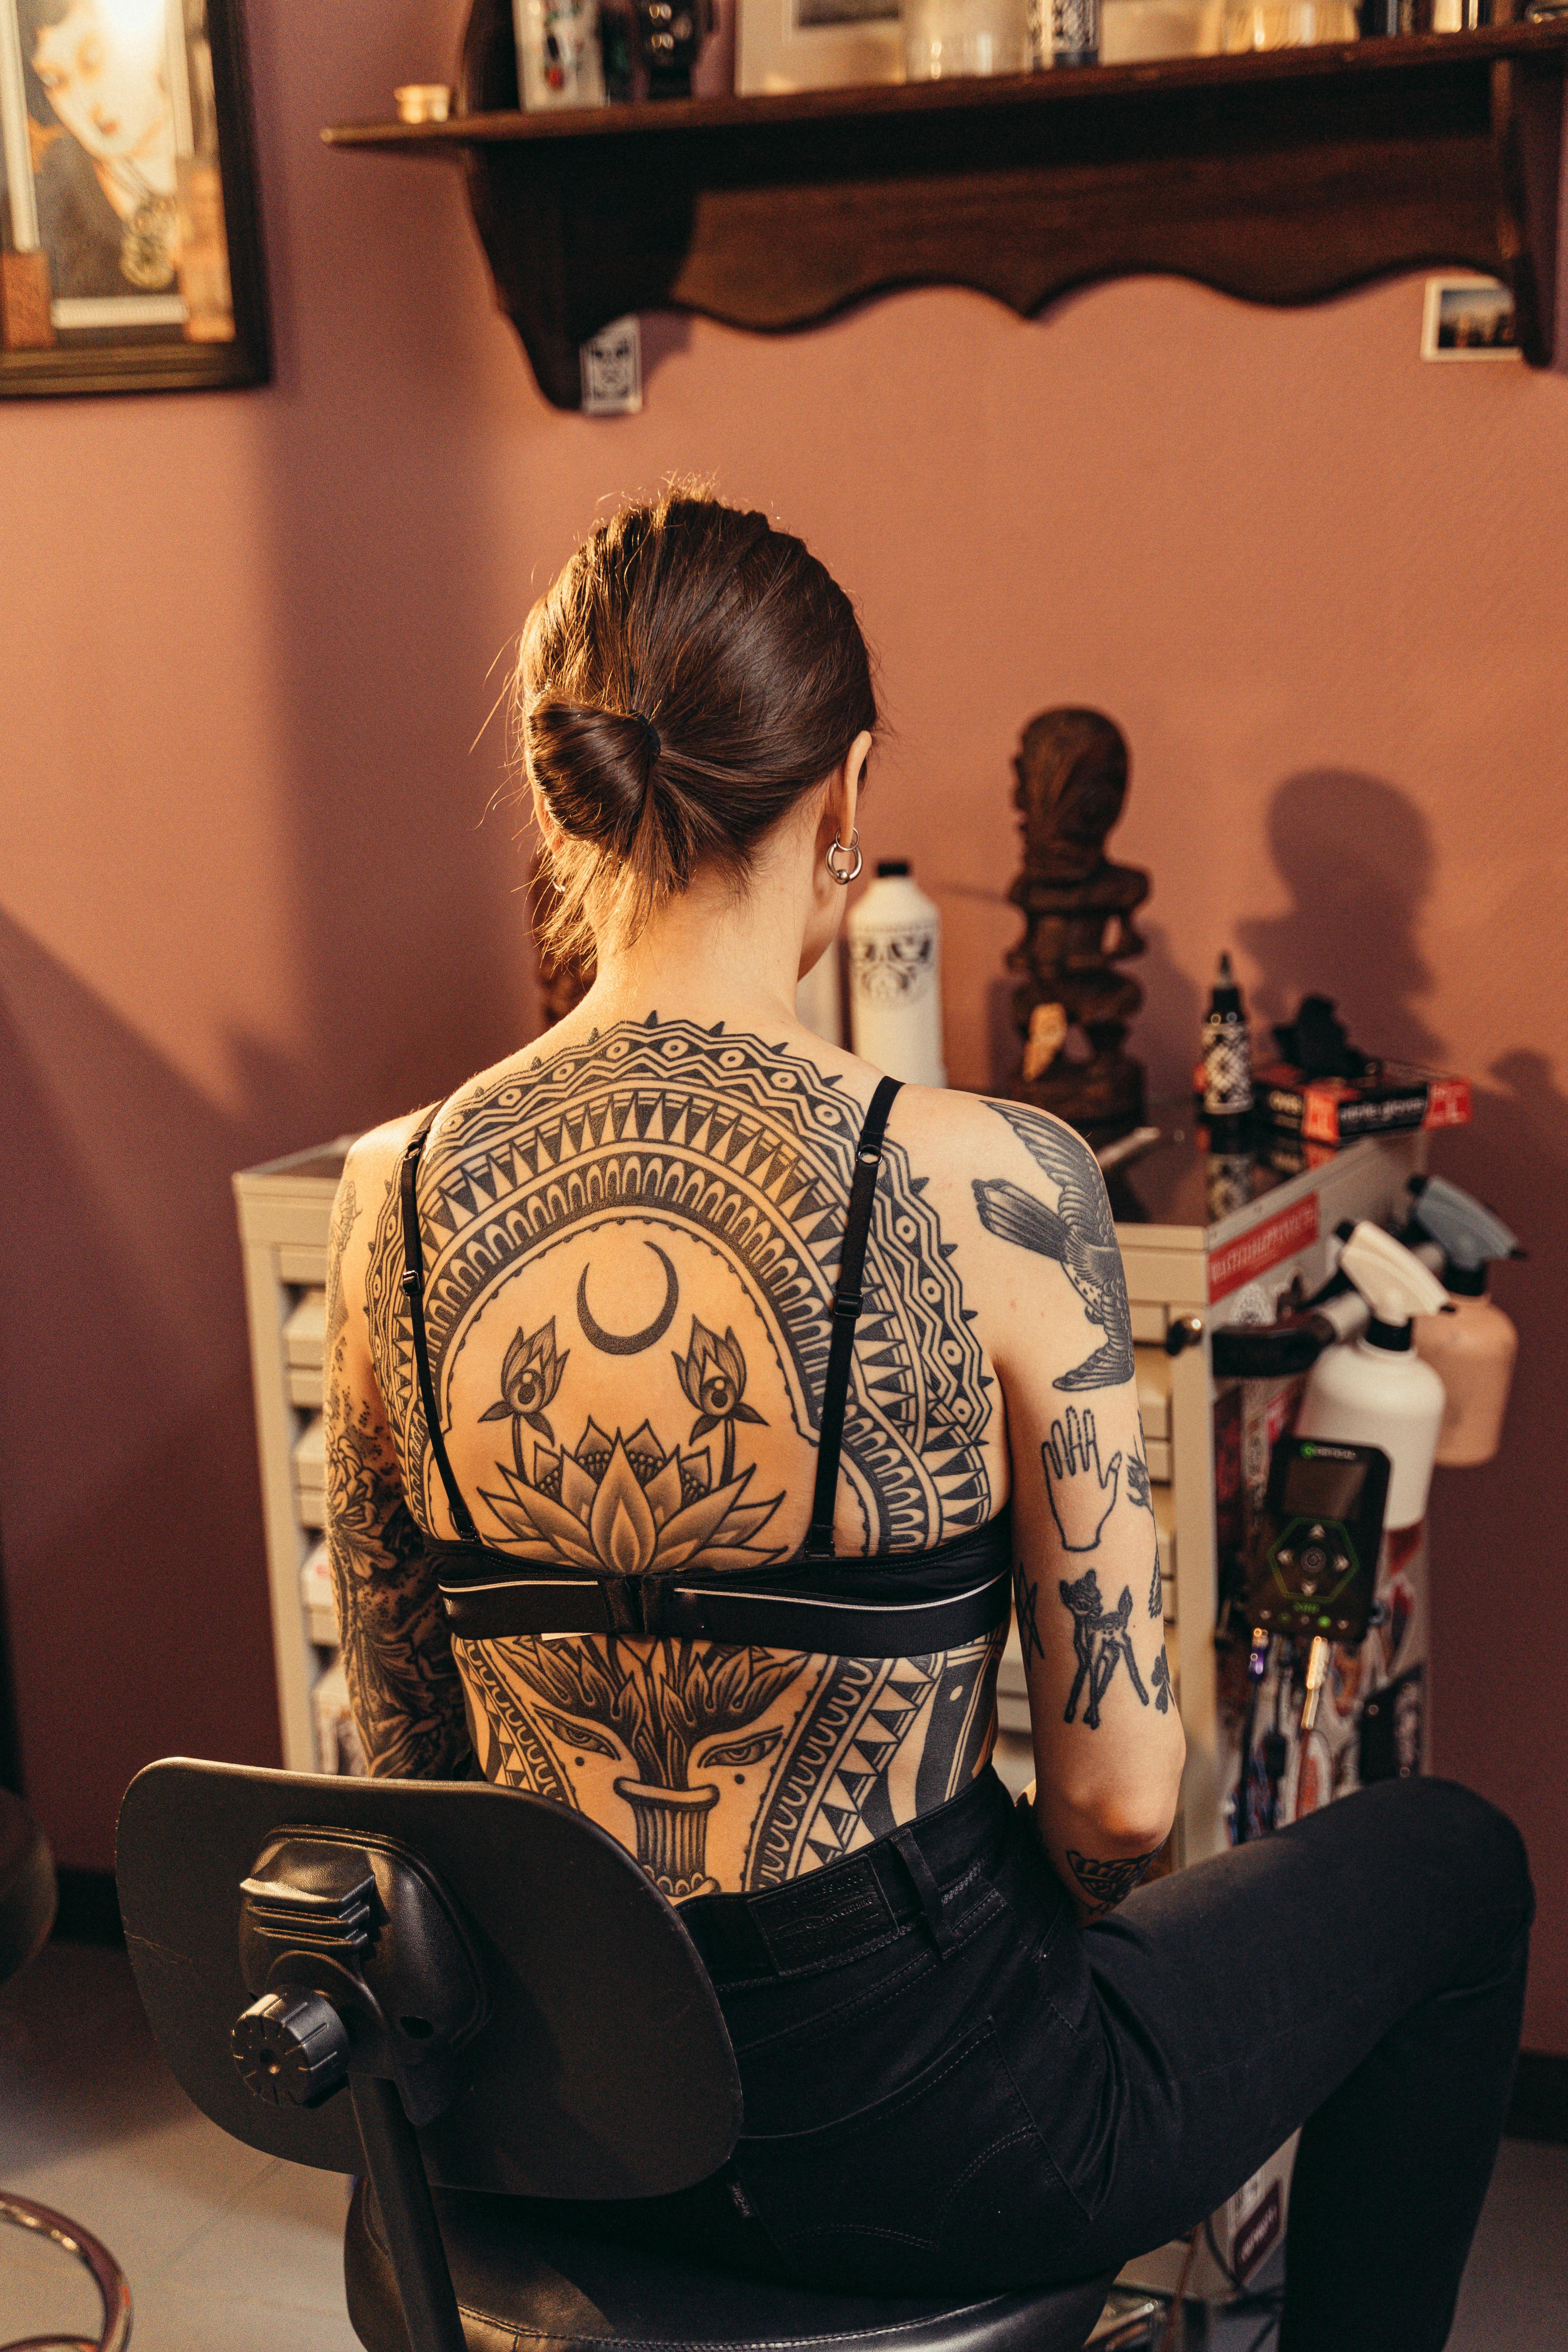 Full Back Tattoos  Askideascom